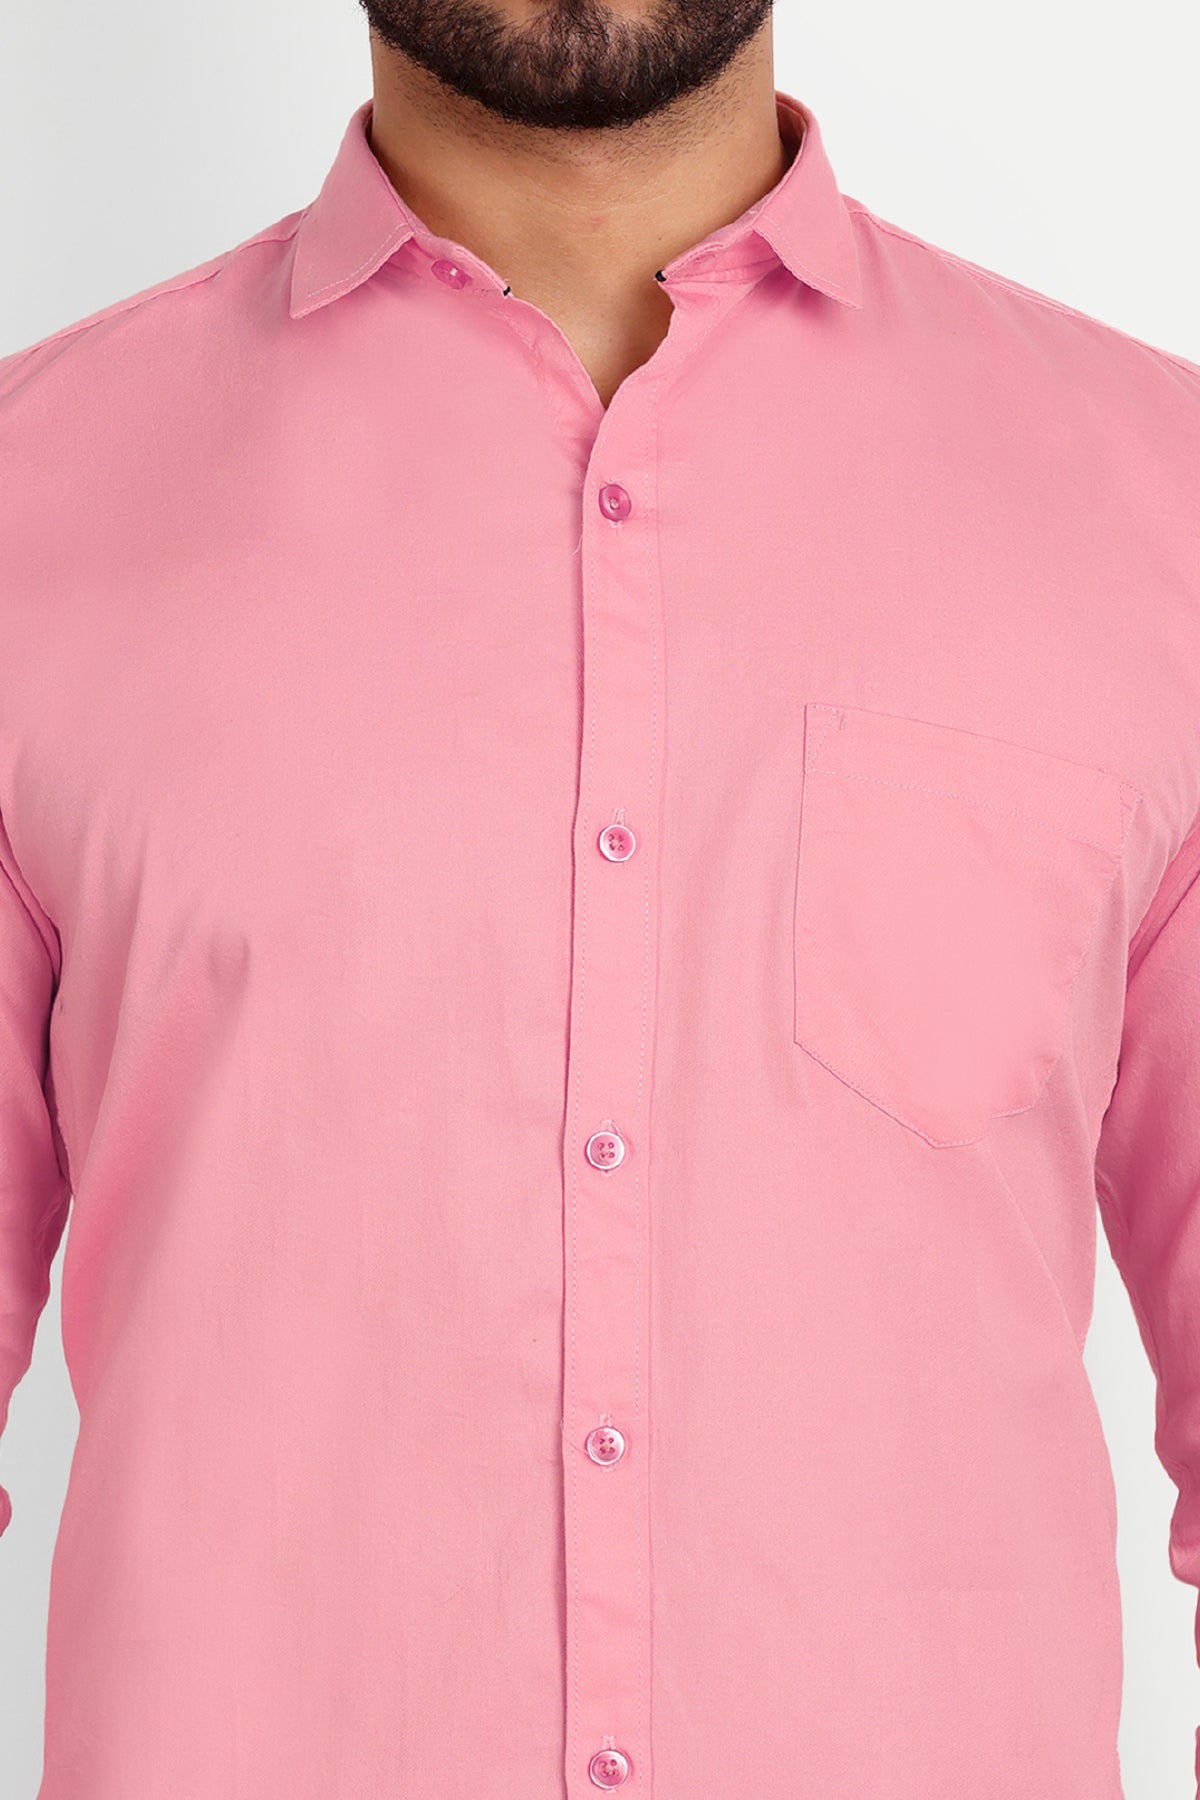 Men Slim Fit Dusty Pink Shirt